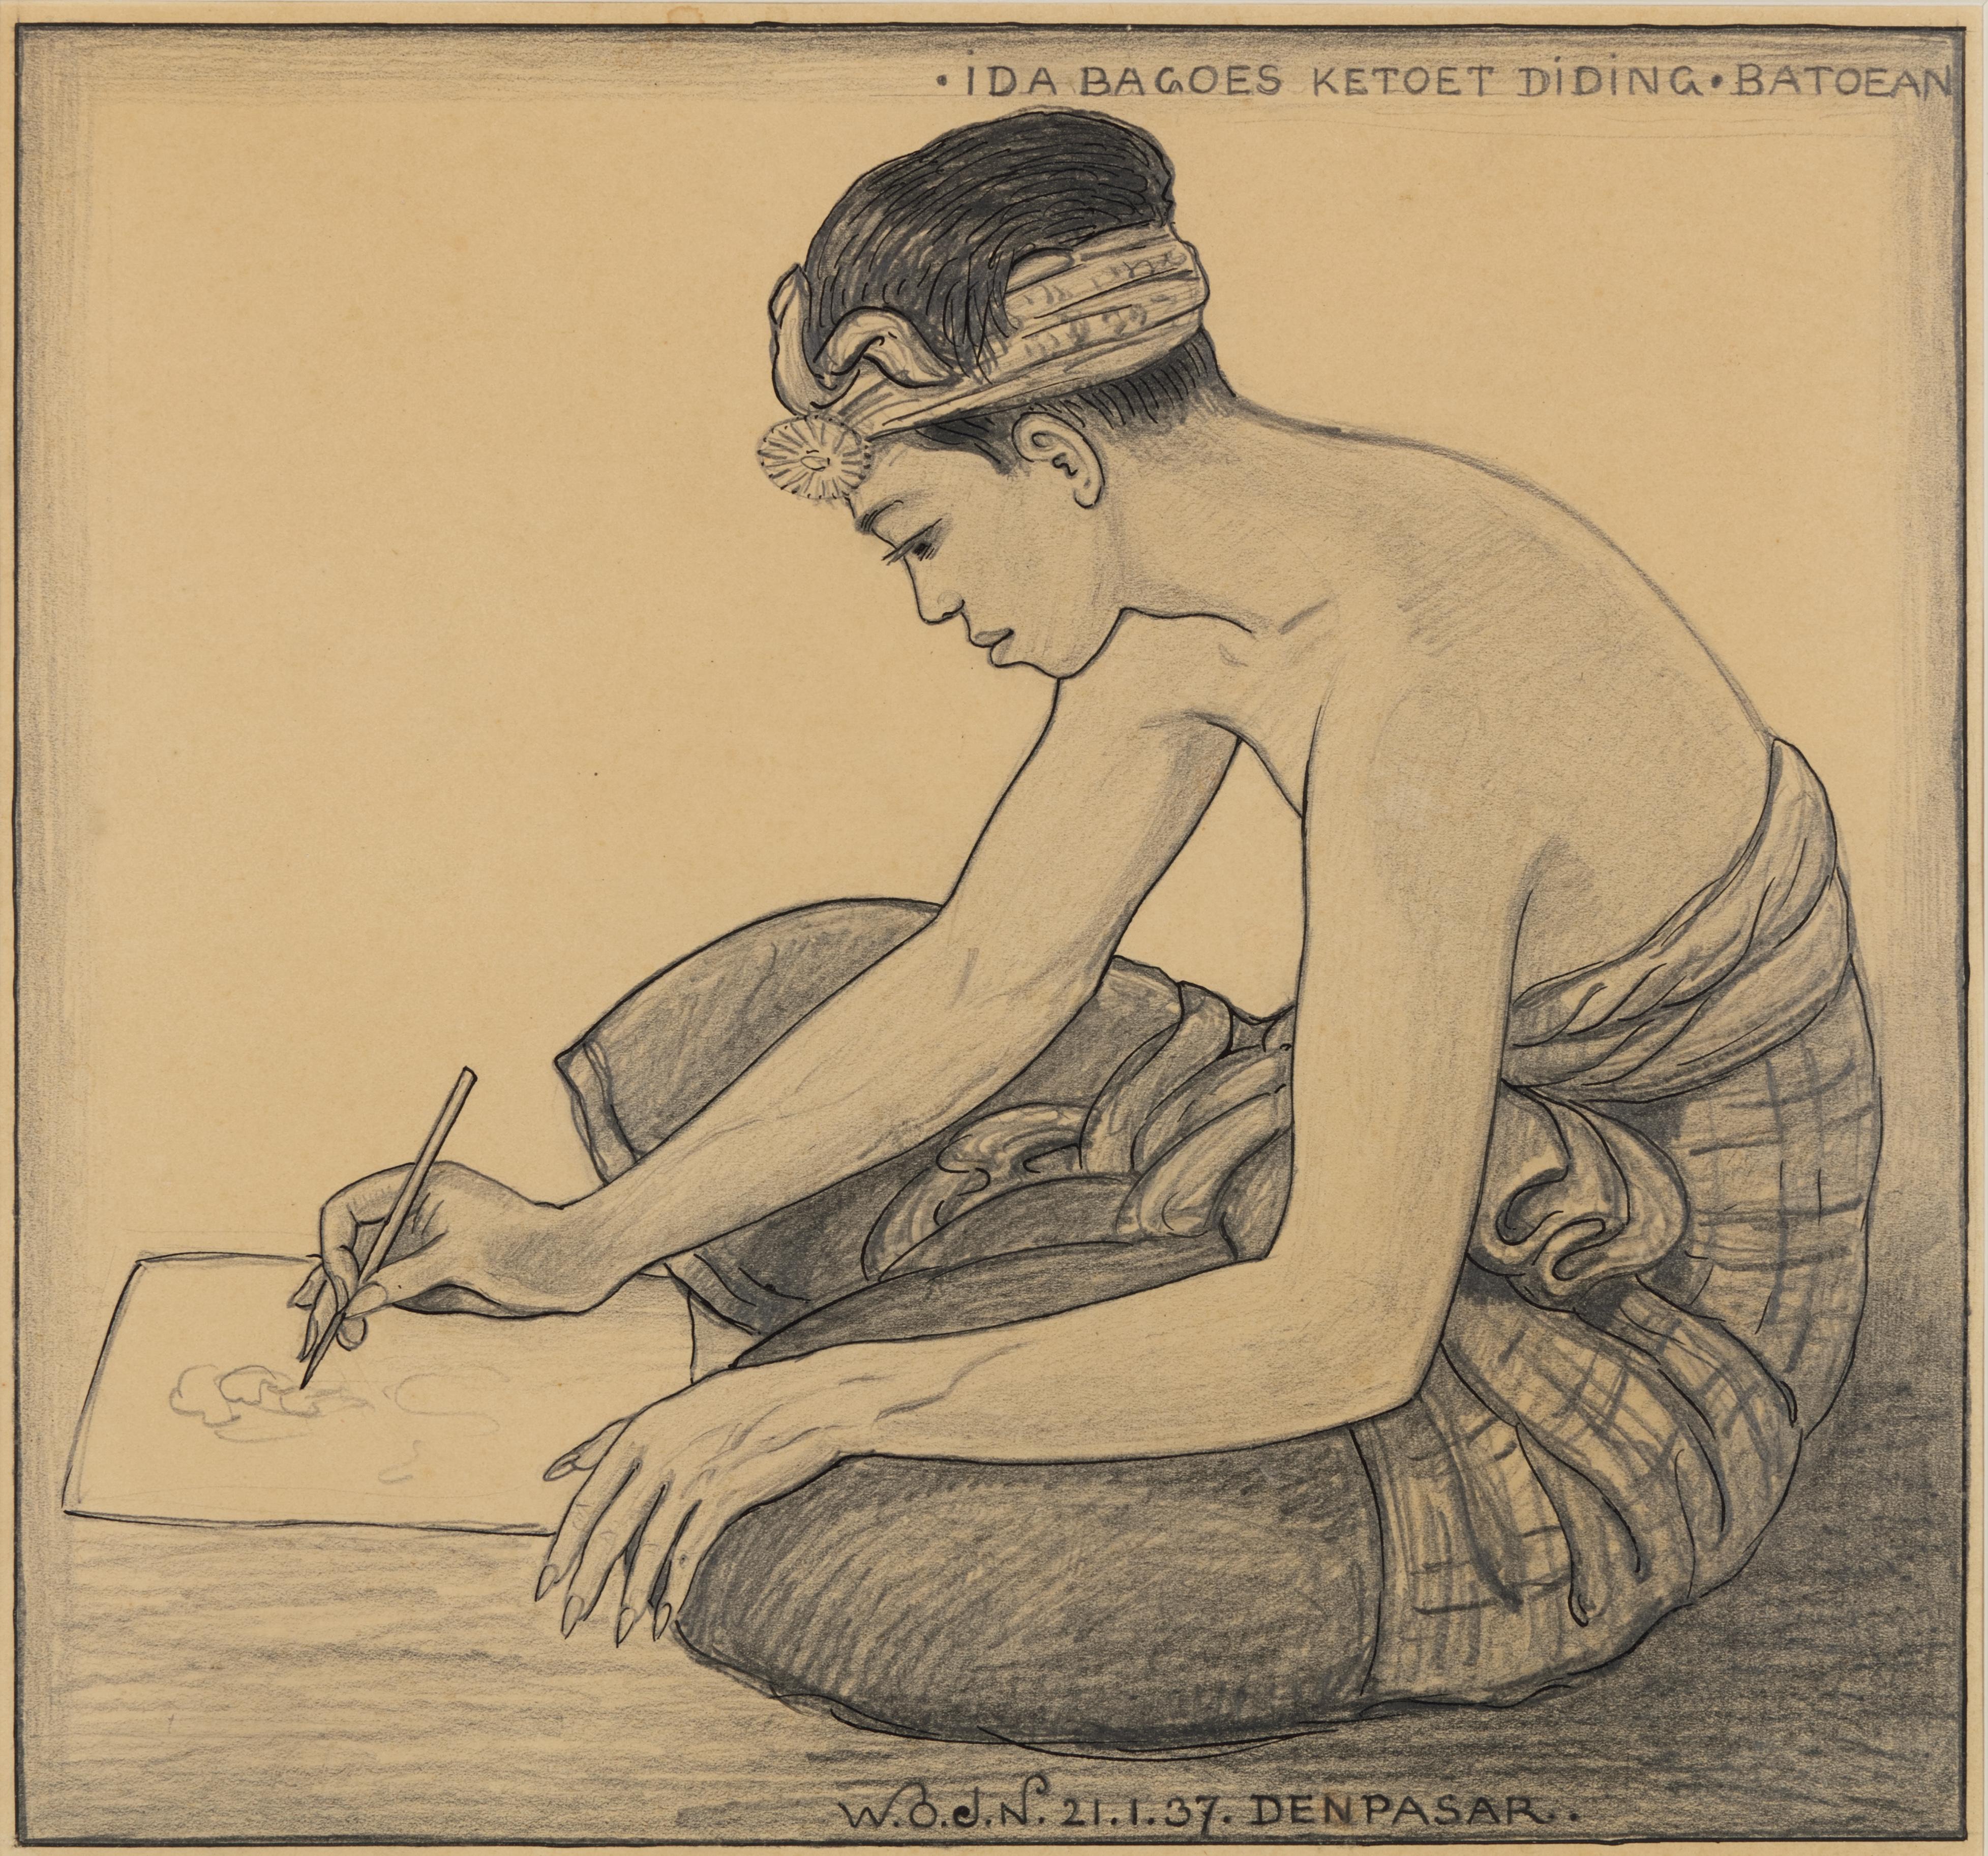 Portrait of artist Ida Bagoes Ketut Diding, Bali, 1937